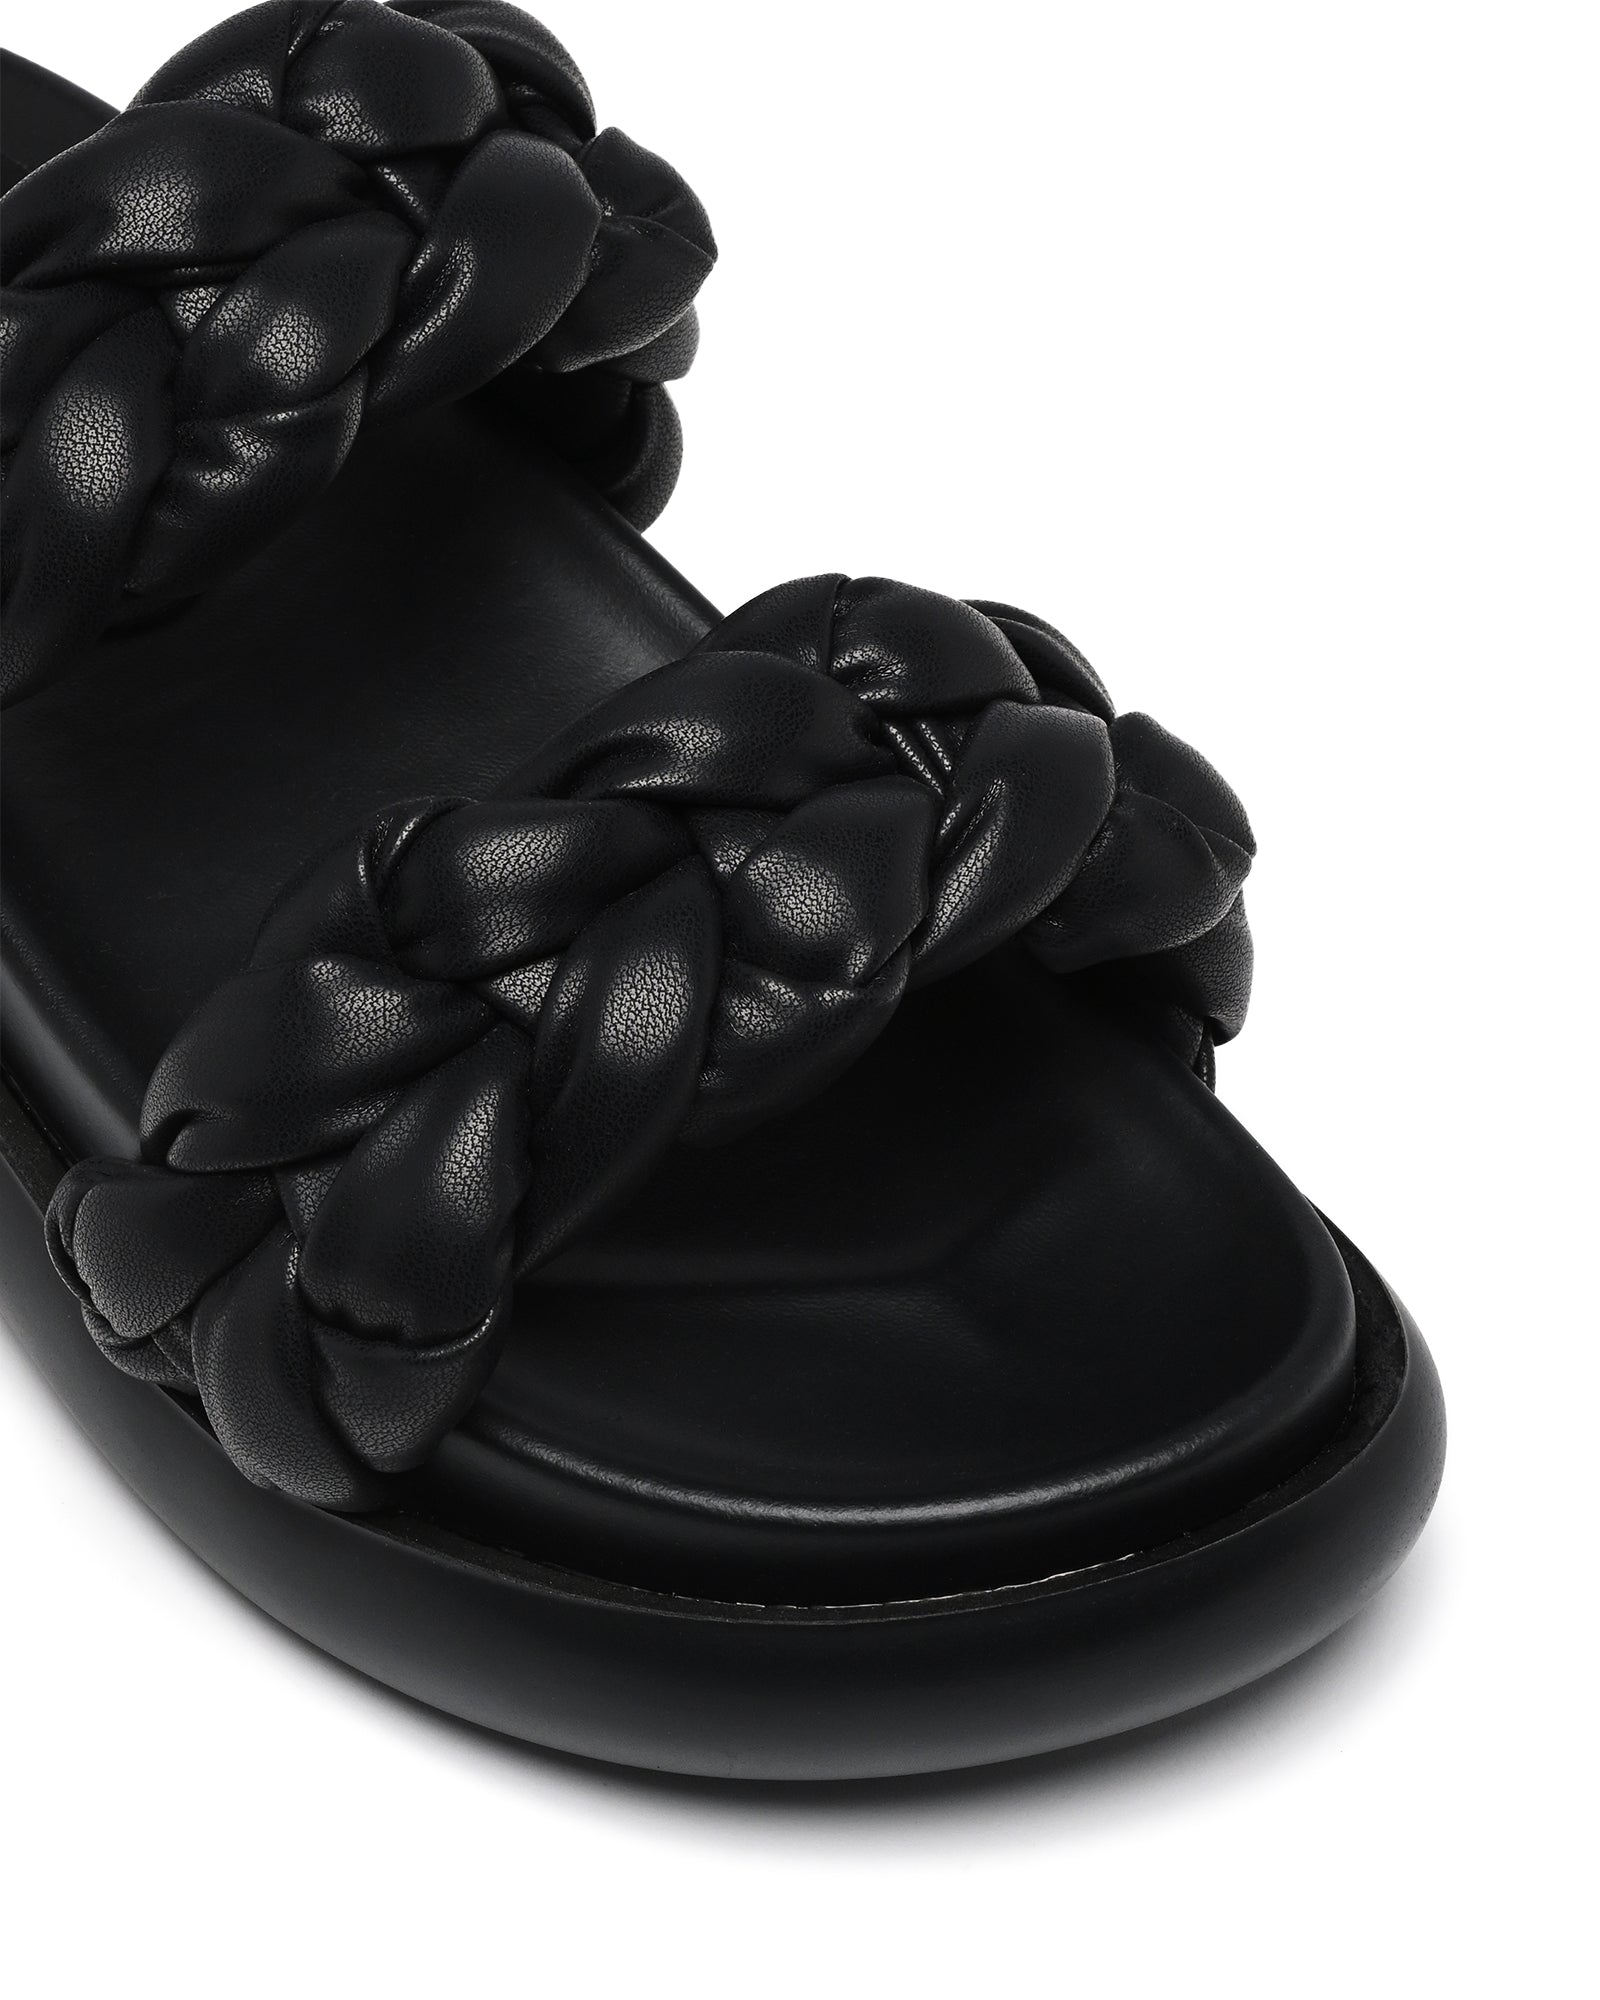 Therapy Shoes Vandal Black Smooth | Women's Sandals | Slides | Flatform